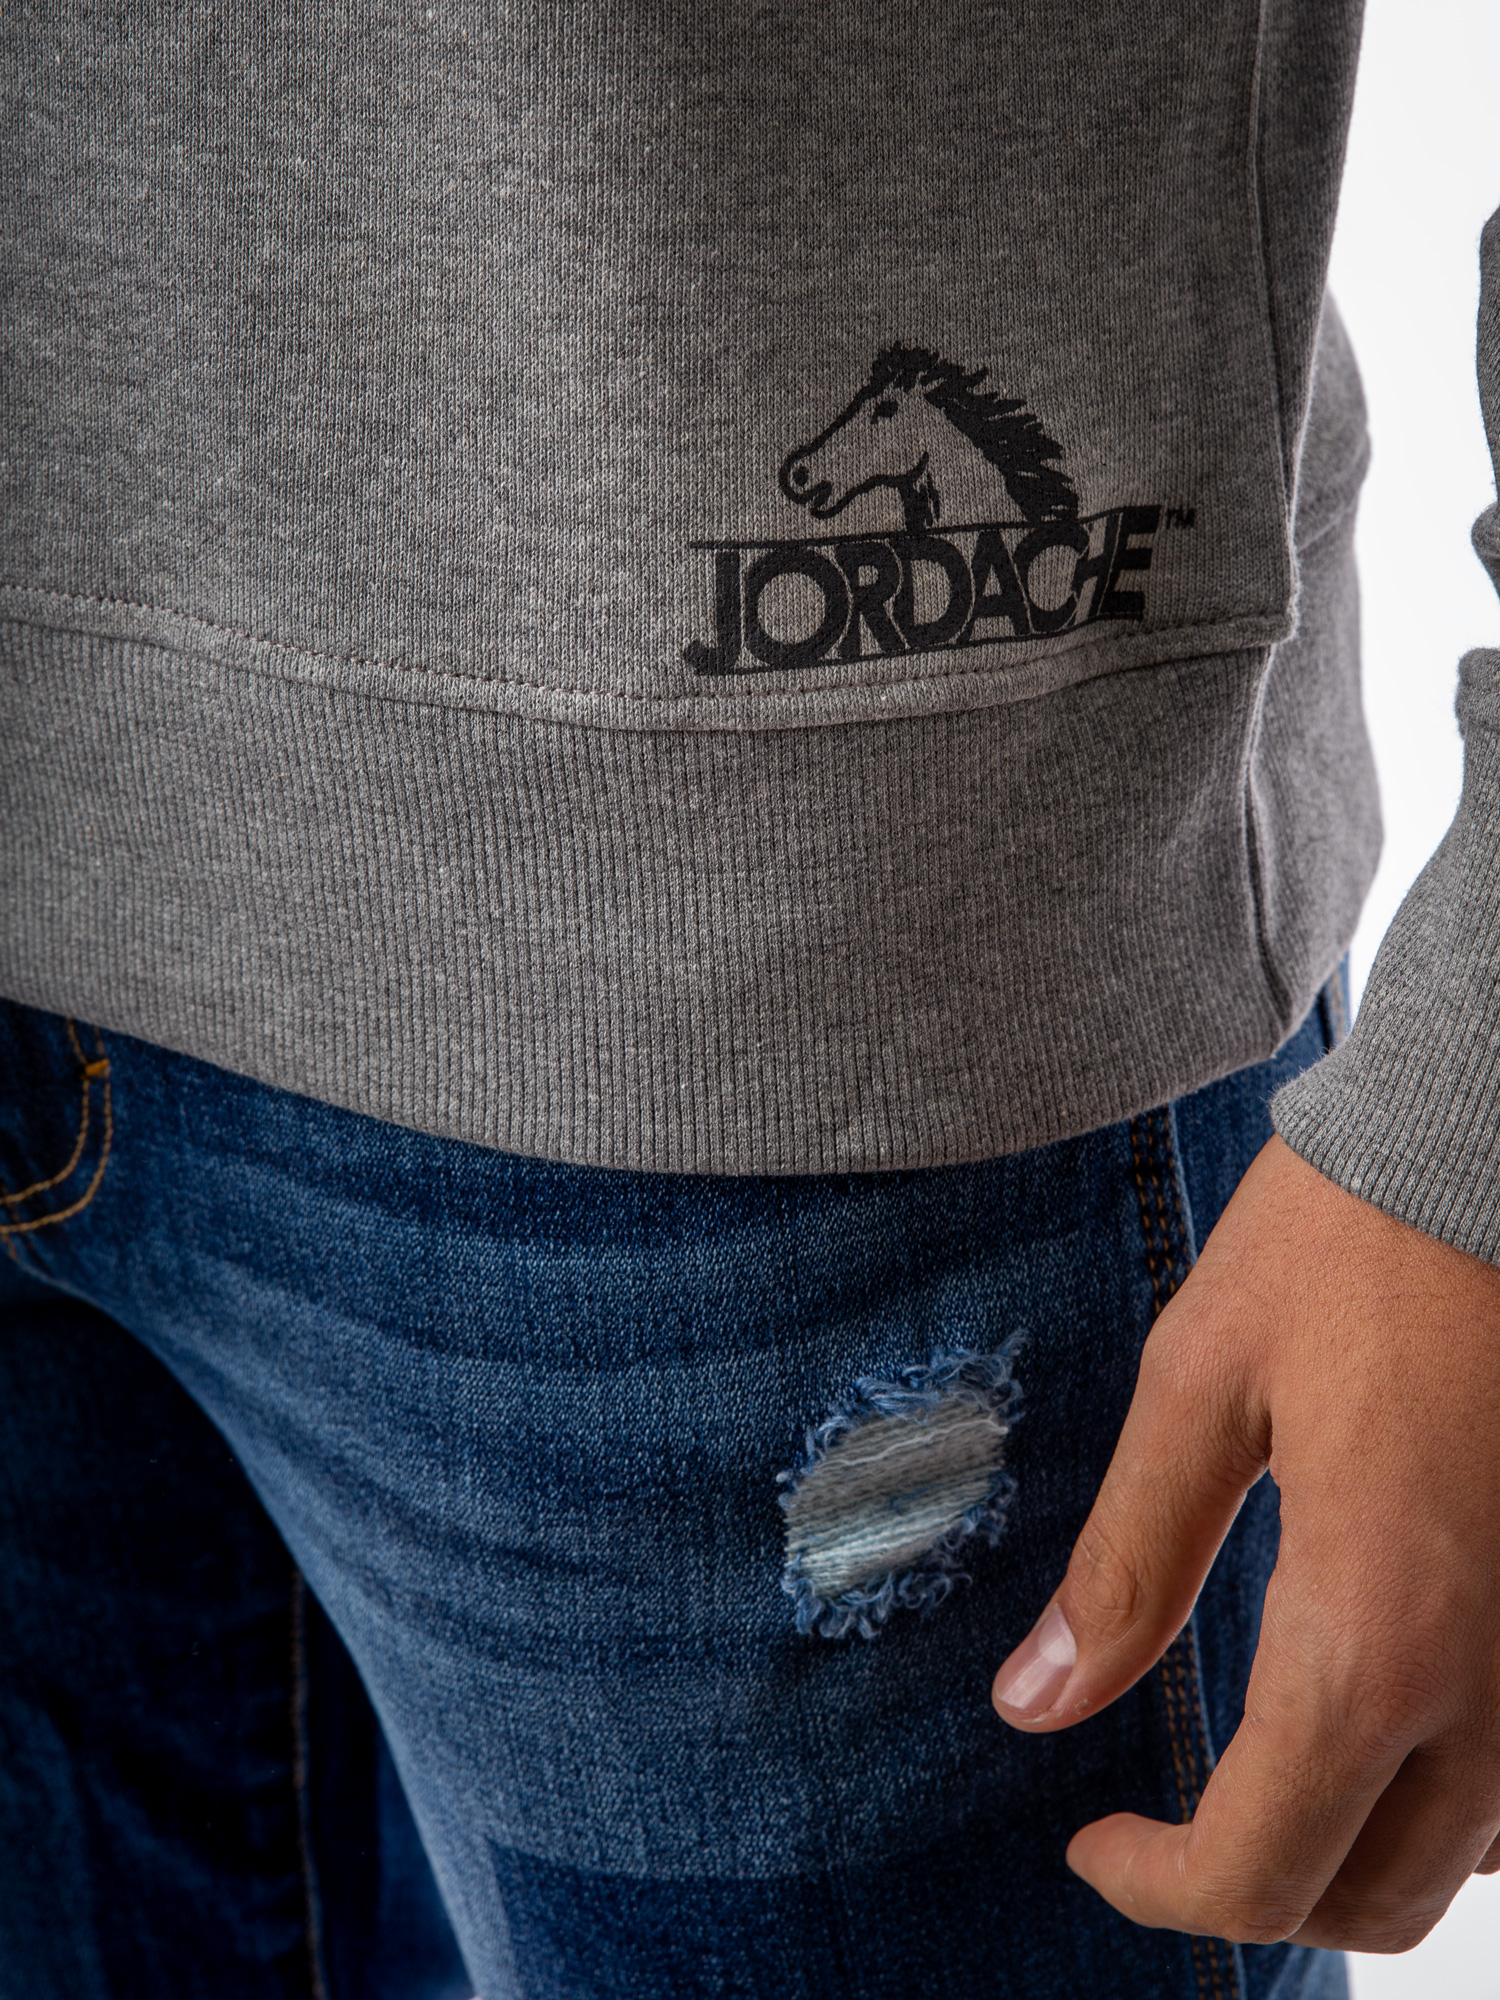 Jordache Vintage Men's Alen Yoke Pullover Sweatshirt, Sizes S-2XL - image 4 of 5